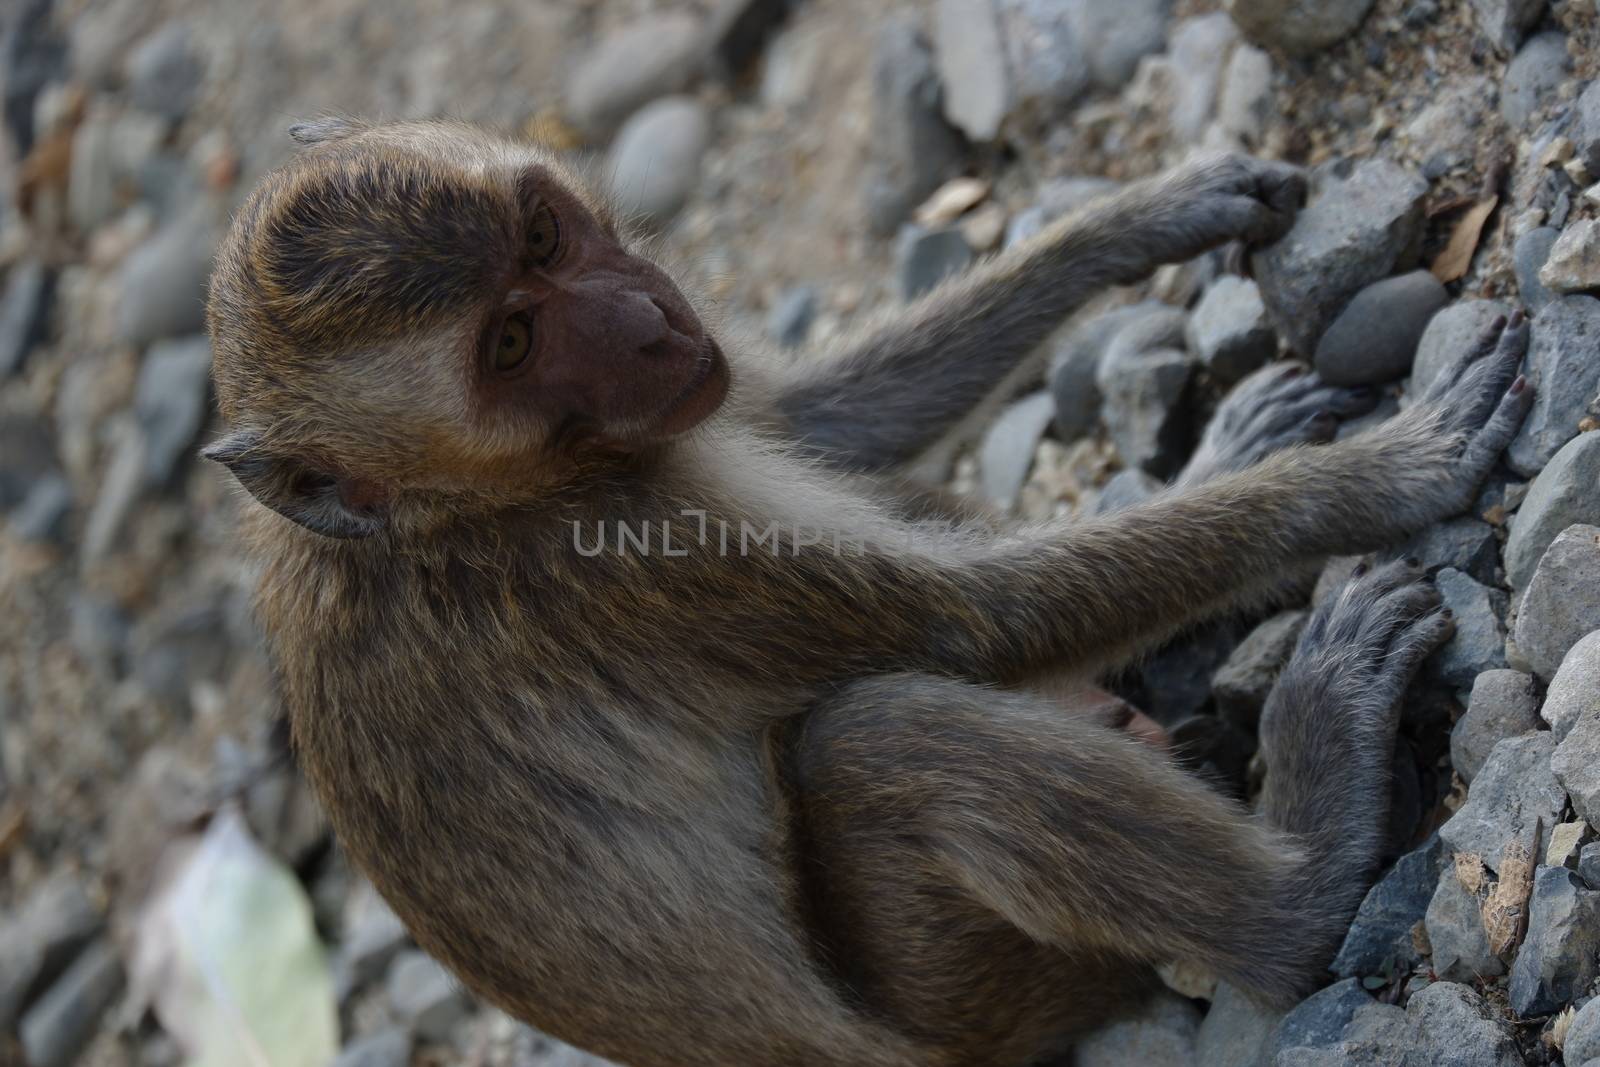 Macaca fascicularis (long-tailed macaque) by pengejarsenja